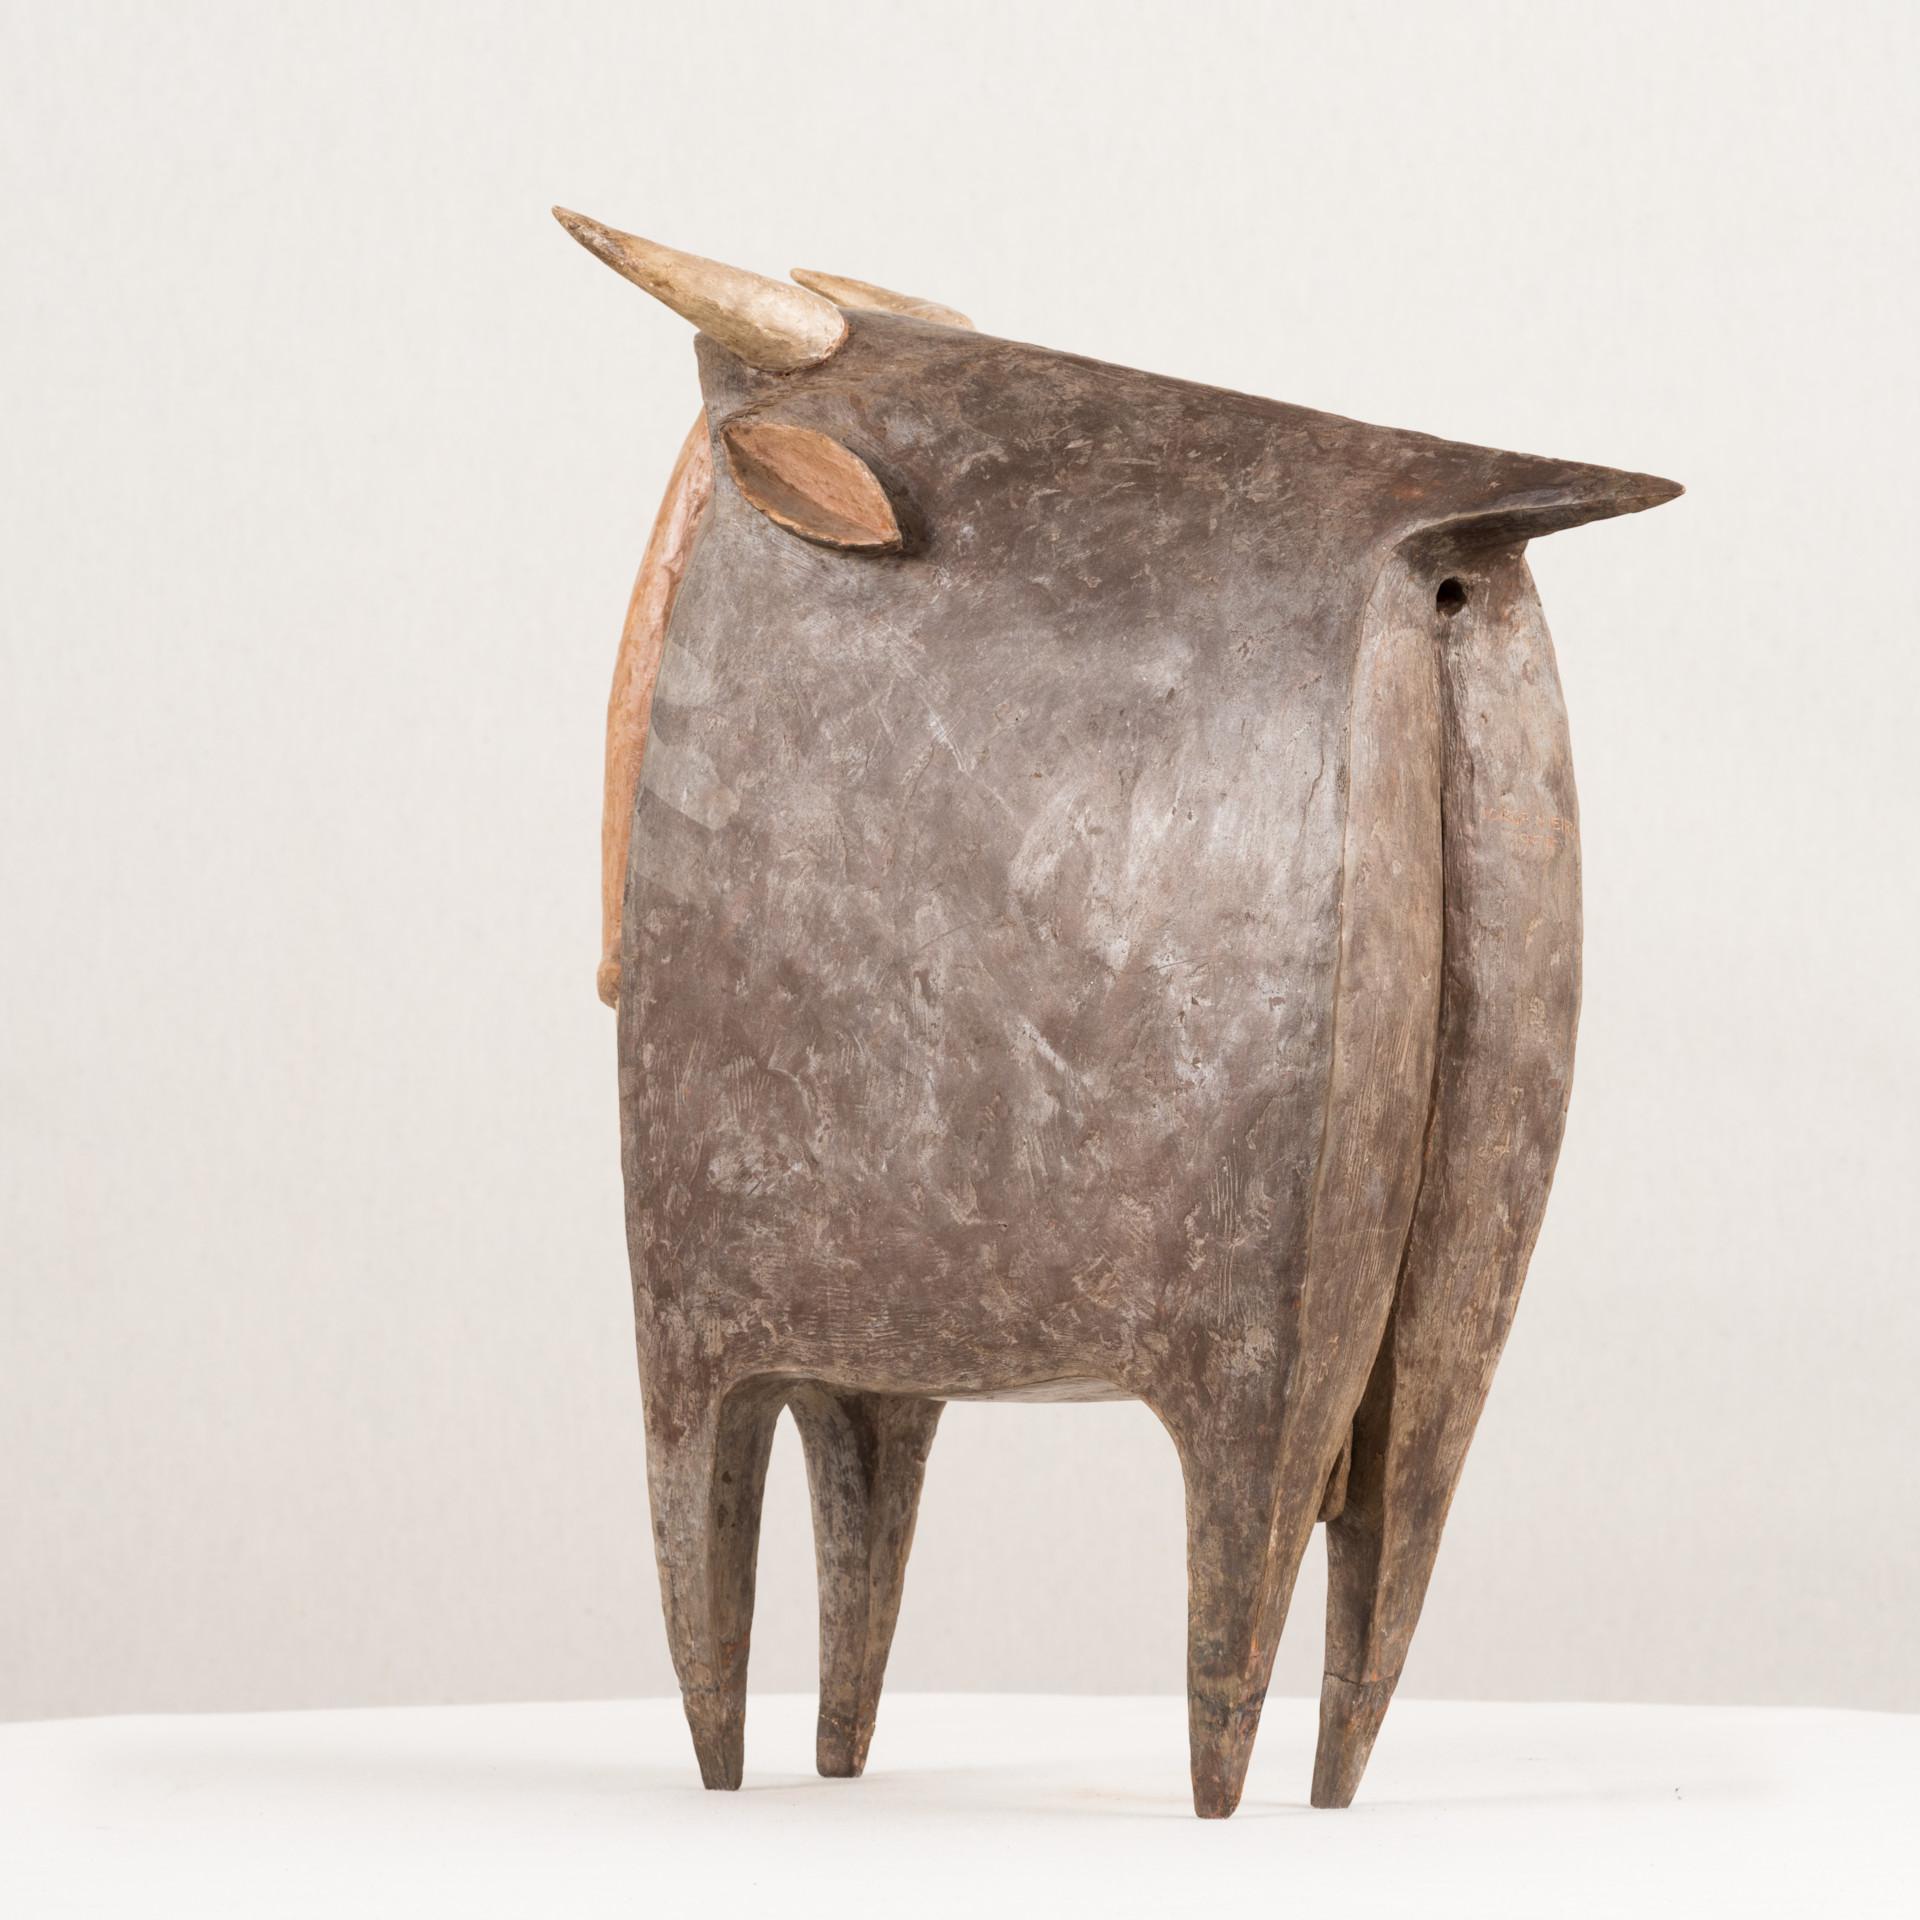 Touro, 1955, Jorge Vieira, Modern Art, Terracotta Sculpture, Brown and grey For Sale 1